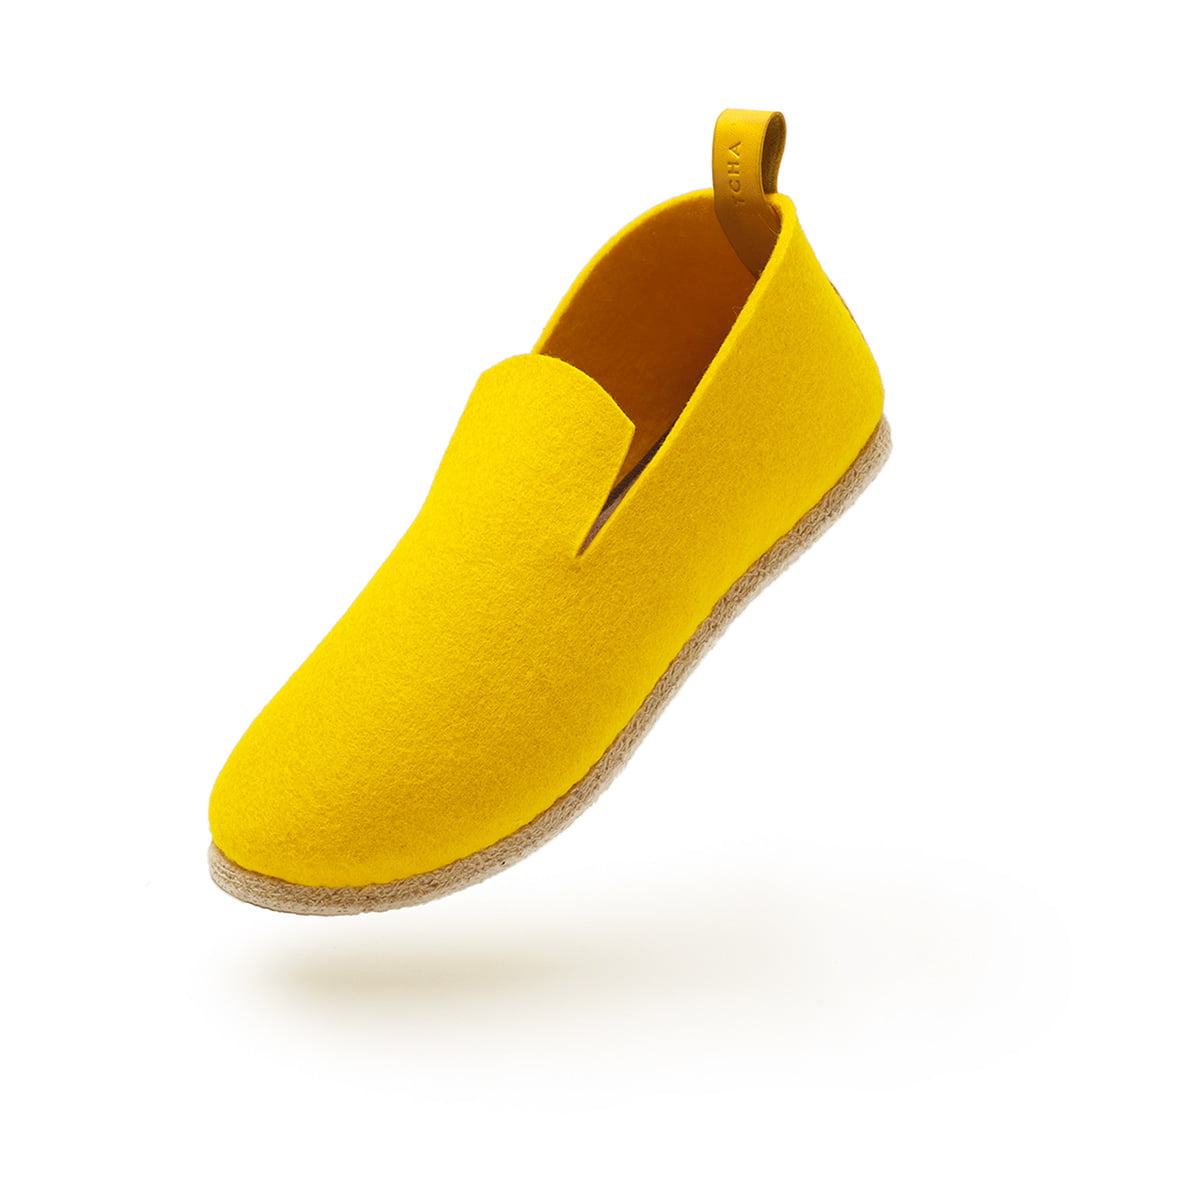 Charentaise Minimal jaune soleil, chausson haut de gamme